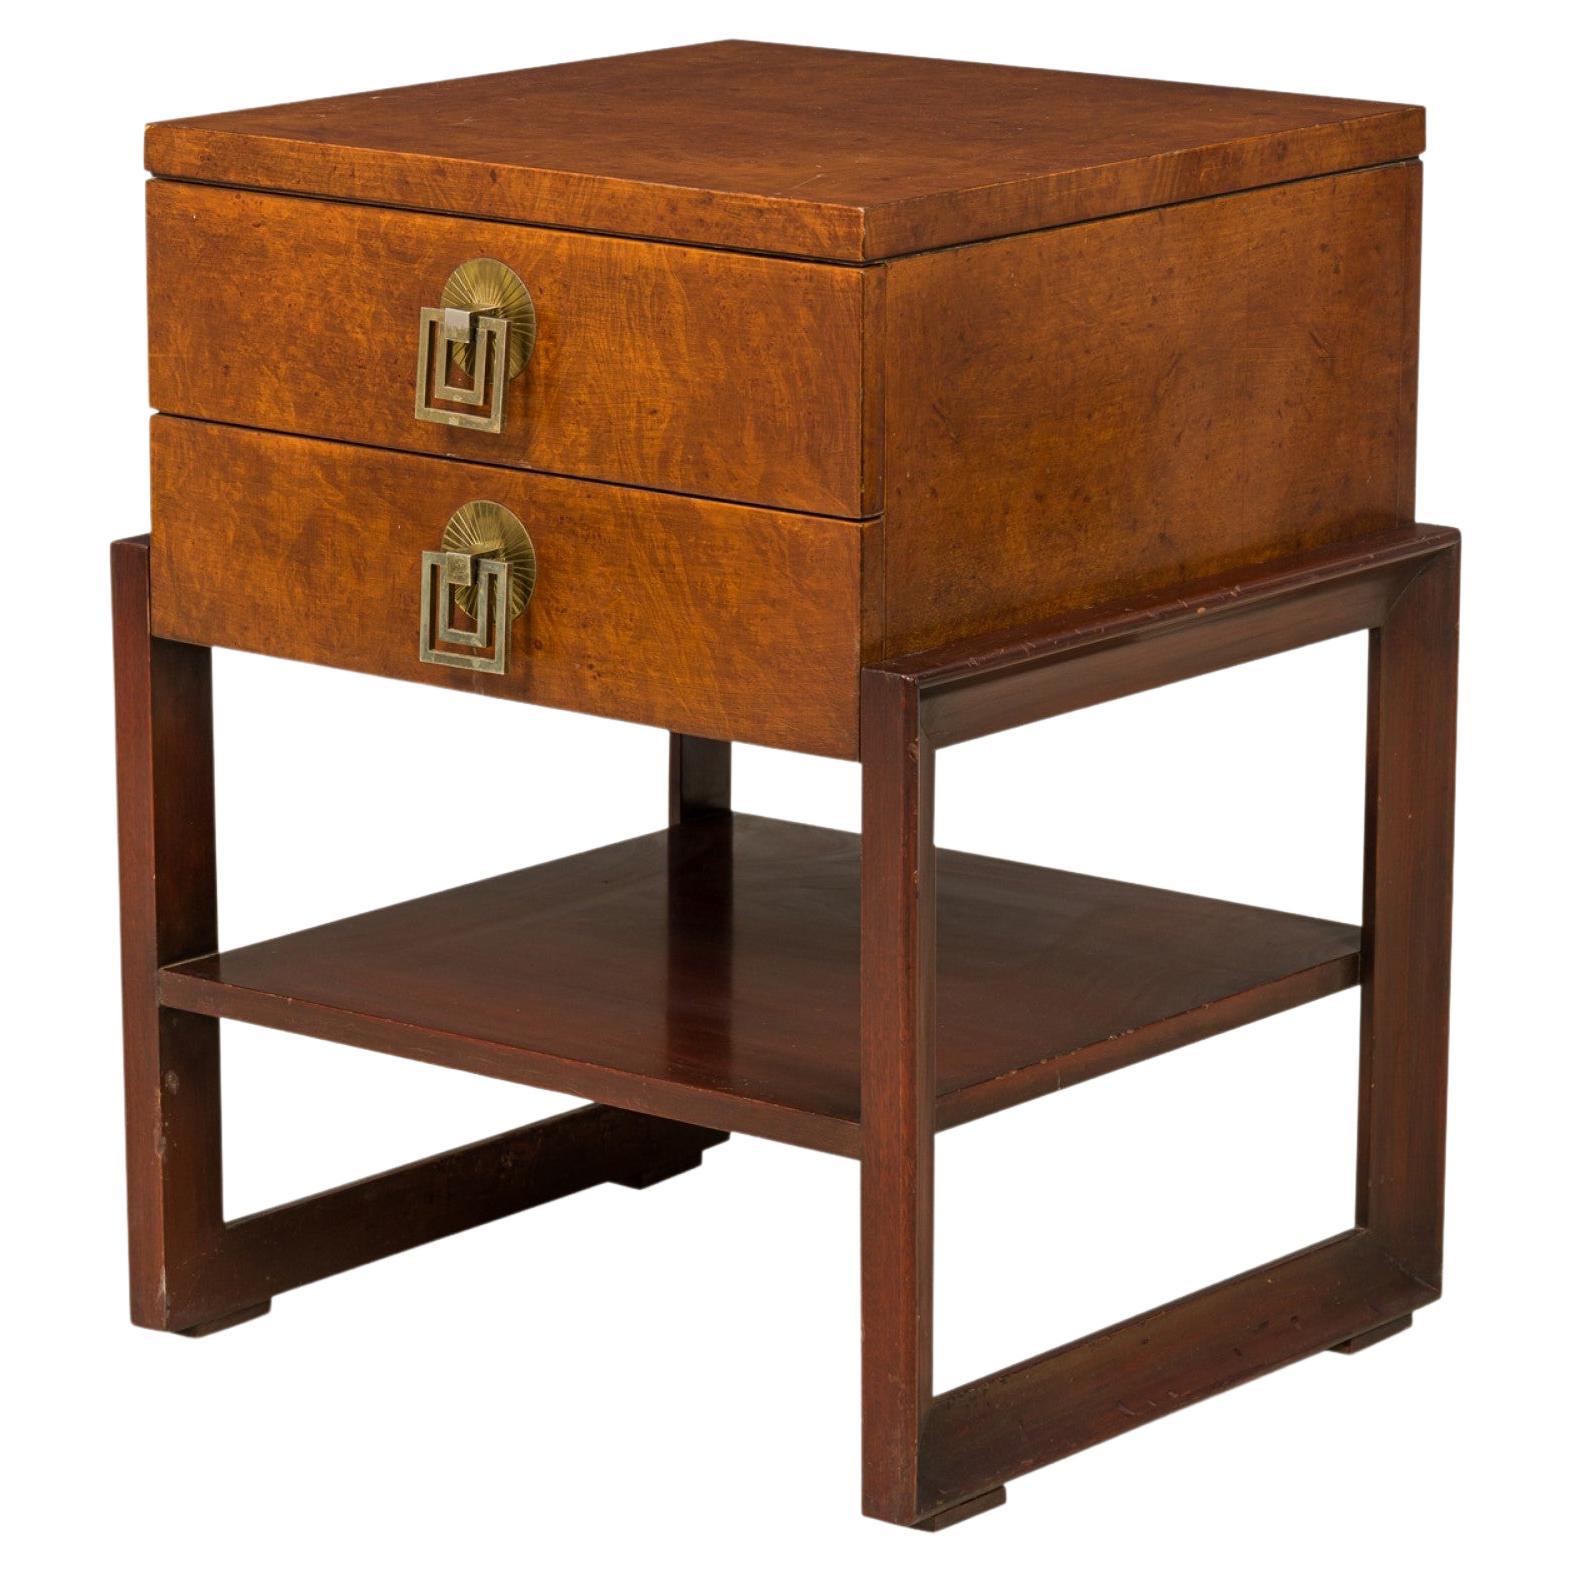 Renzo Rutili for Johnson Furniture Co. Burl Wood Nightstand / Bedside Table